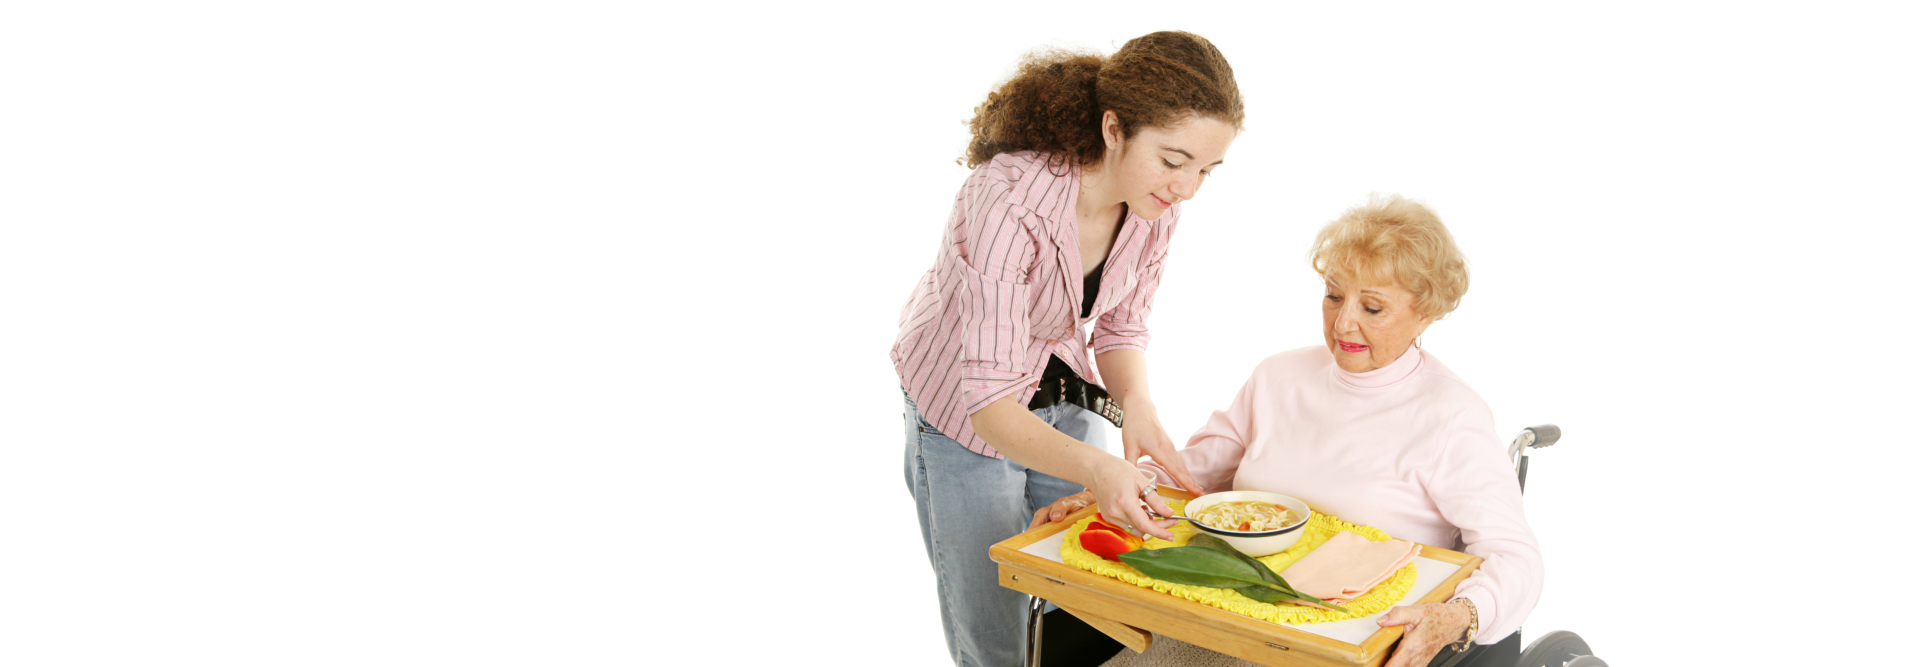 caregiver preparing meal for elderly woman